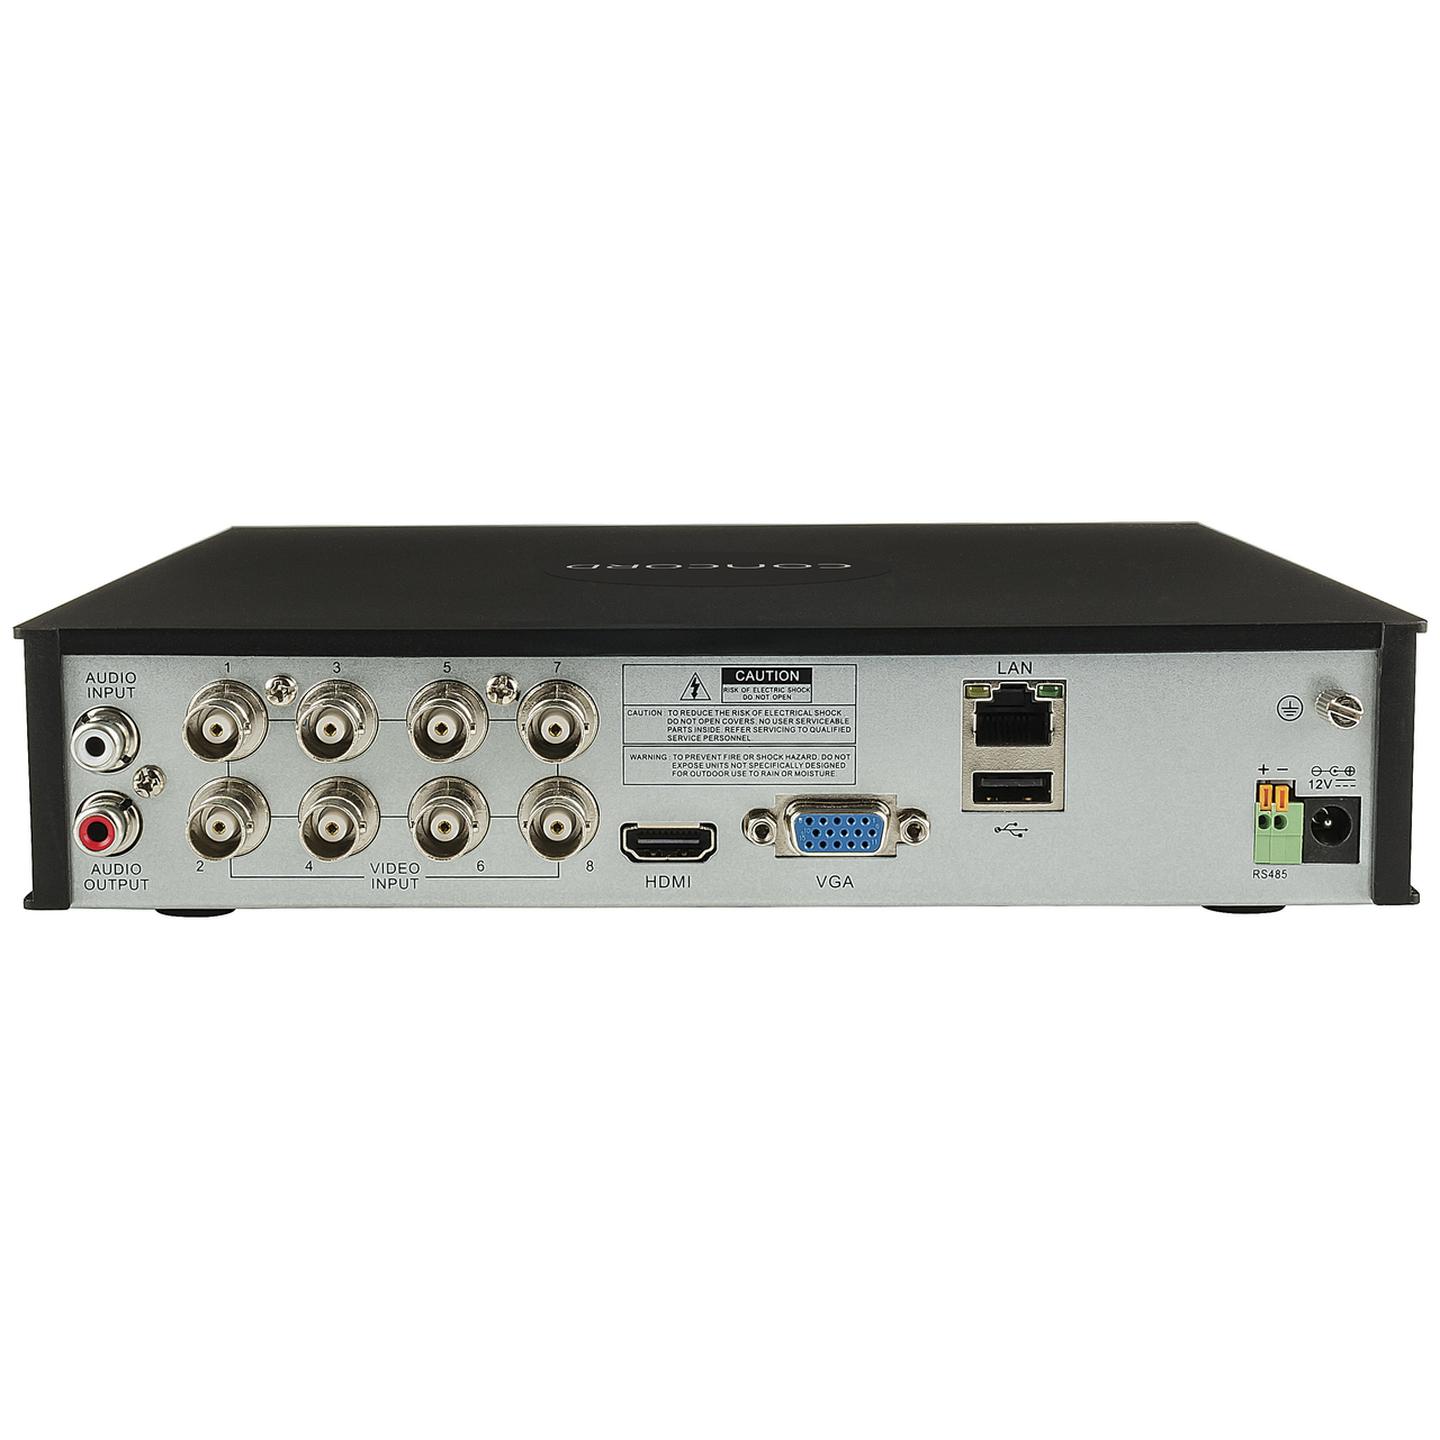 Concord 8 Channel AHD DVR Package - 4x1080p PIR Cameras v2